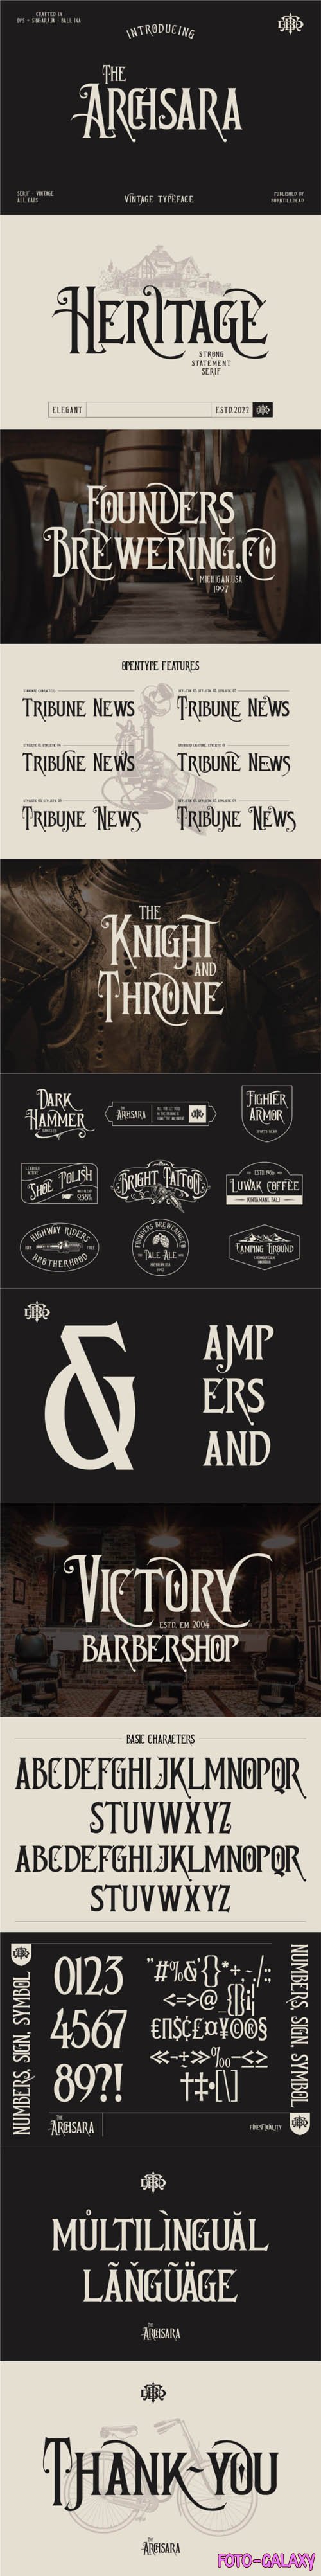 Achsara - Vintage Blackletter Typeface